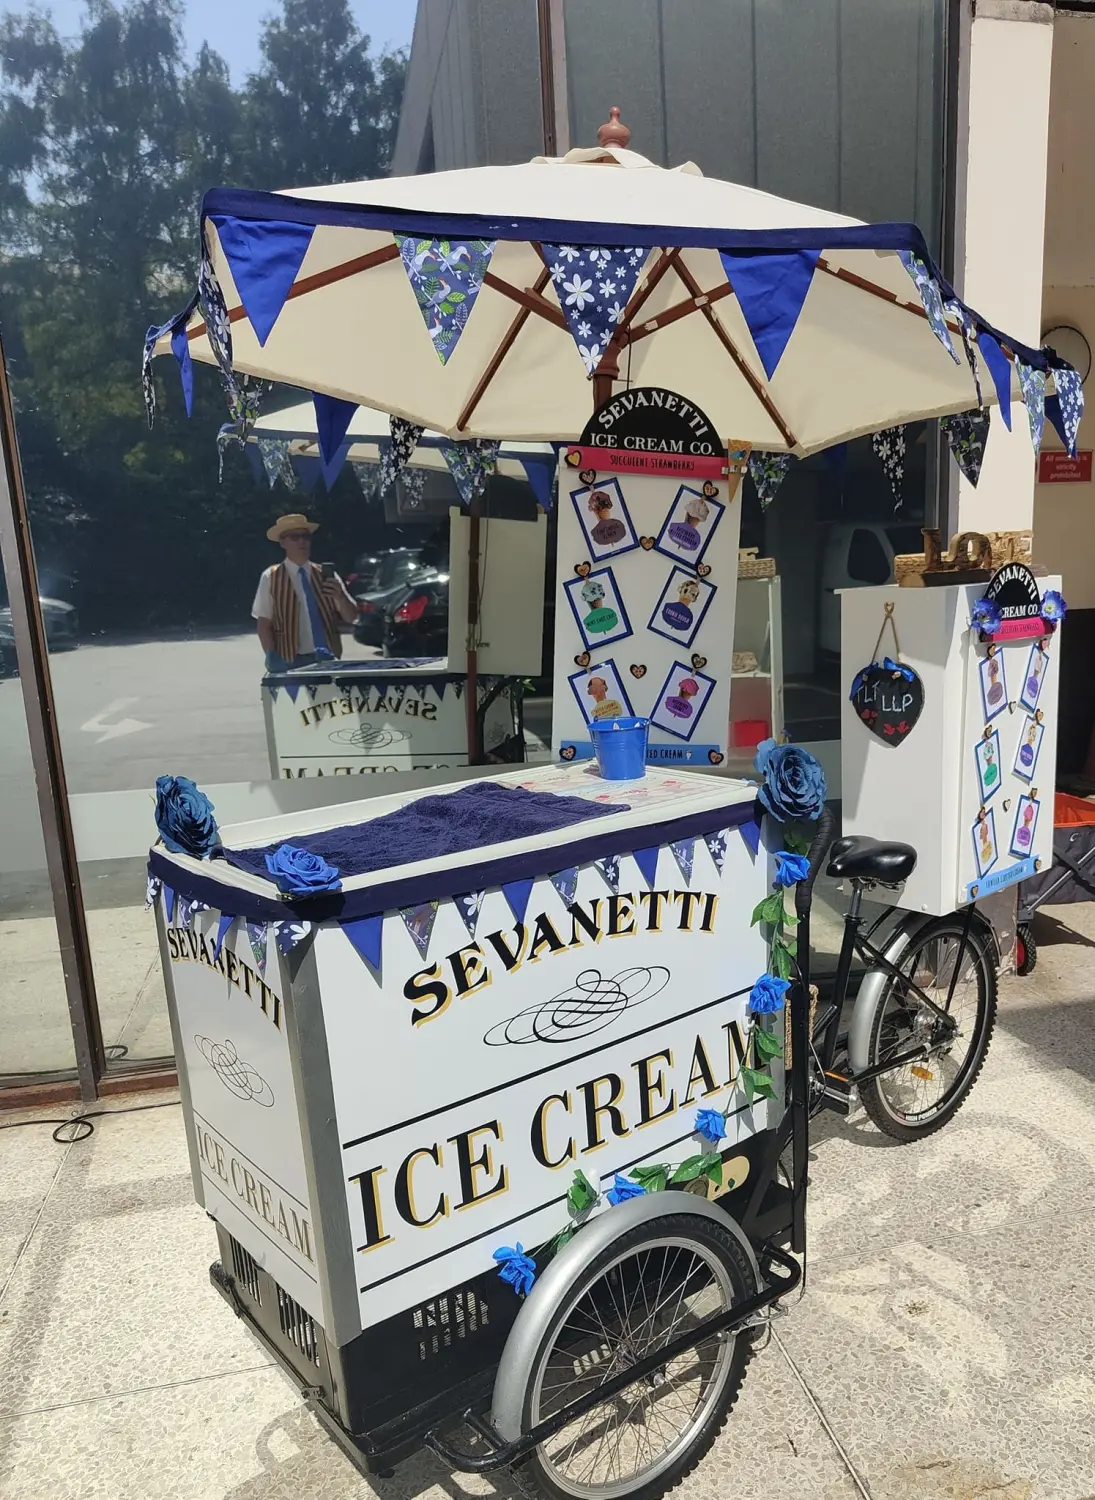 Sevanetti Ice Cream Bikes Colorful Decoration Set